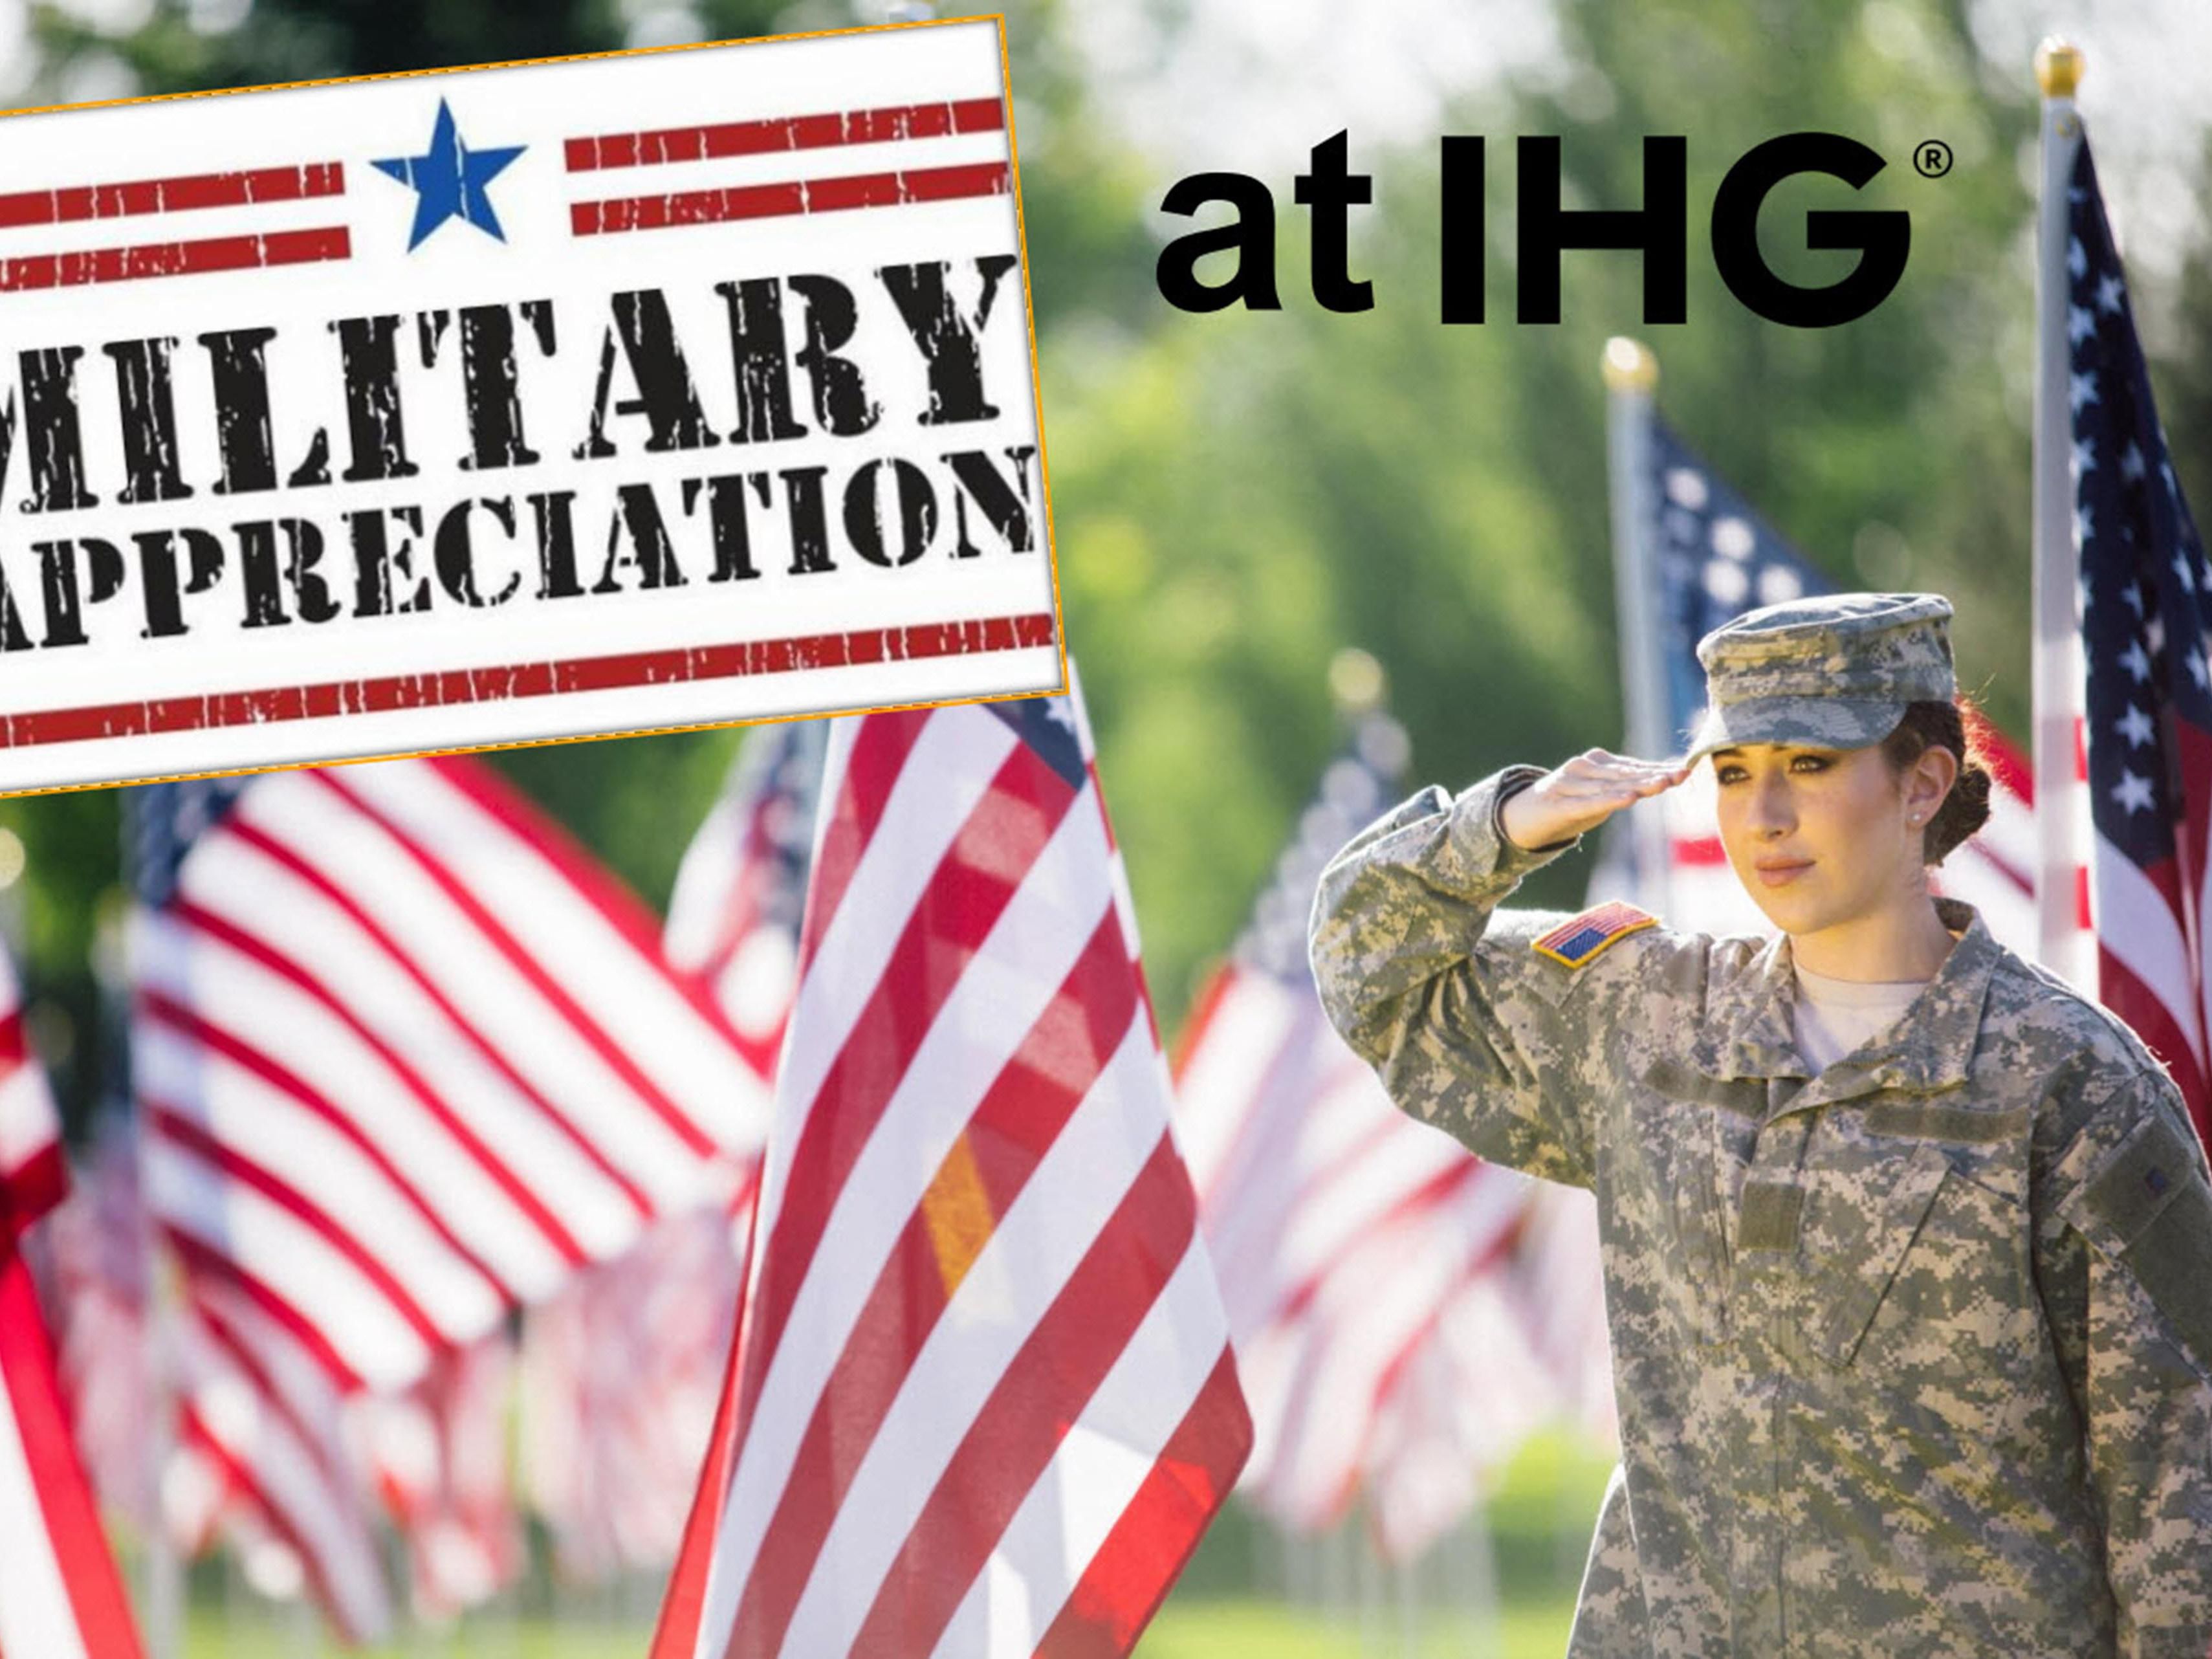 IHG's Military Appreciation Rate